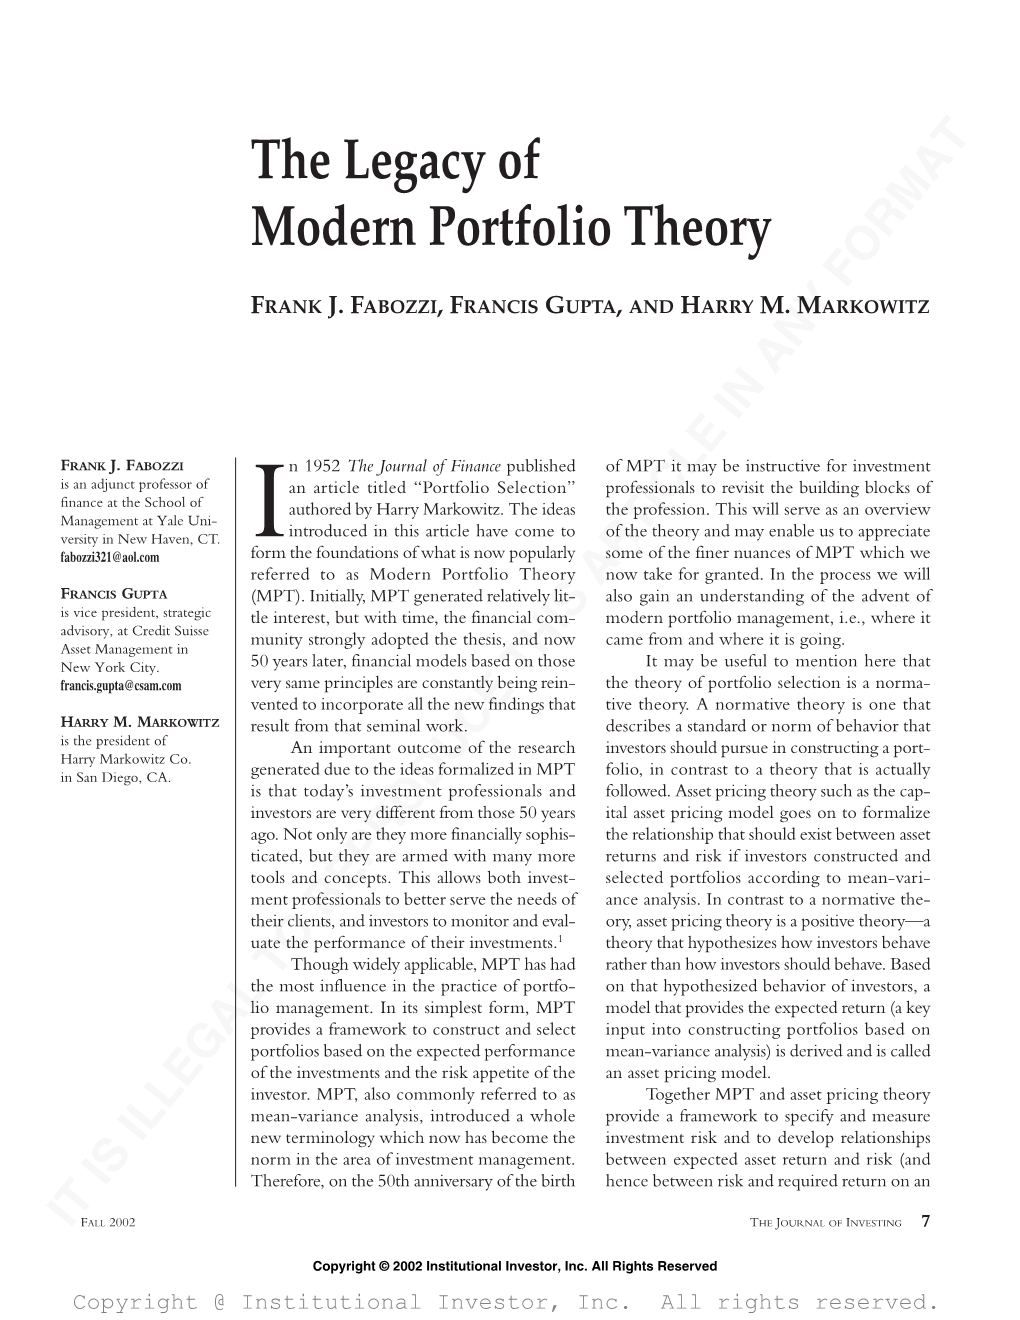 The Legacy of Modern Portfolio Theory